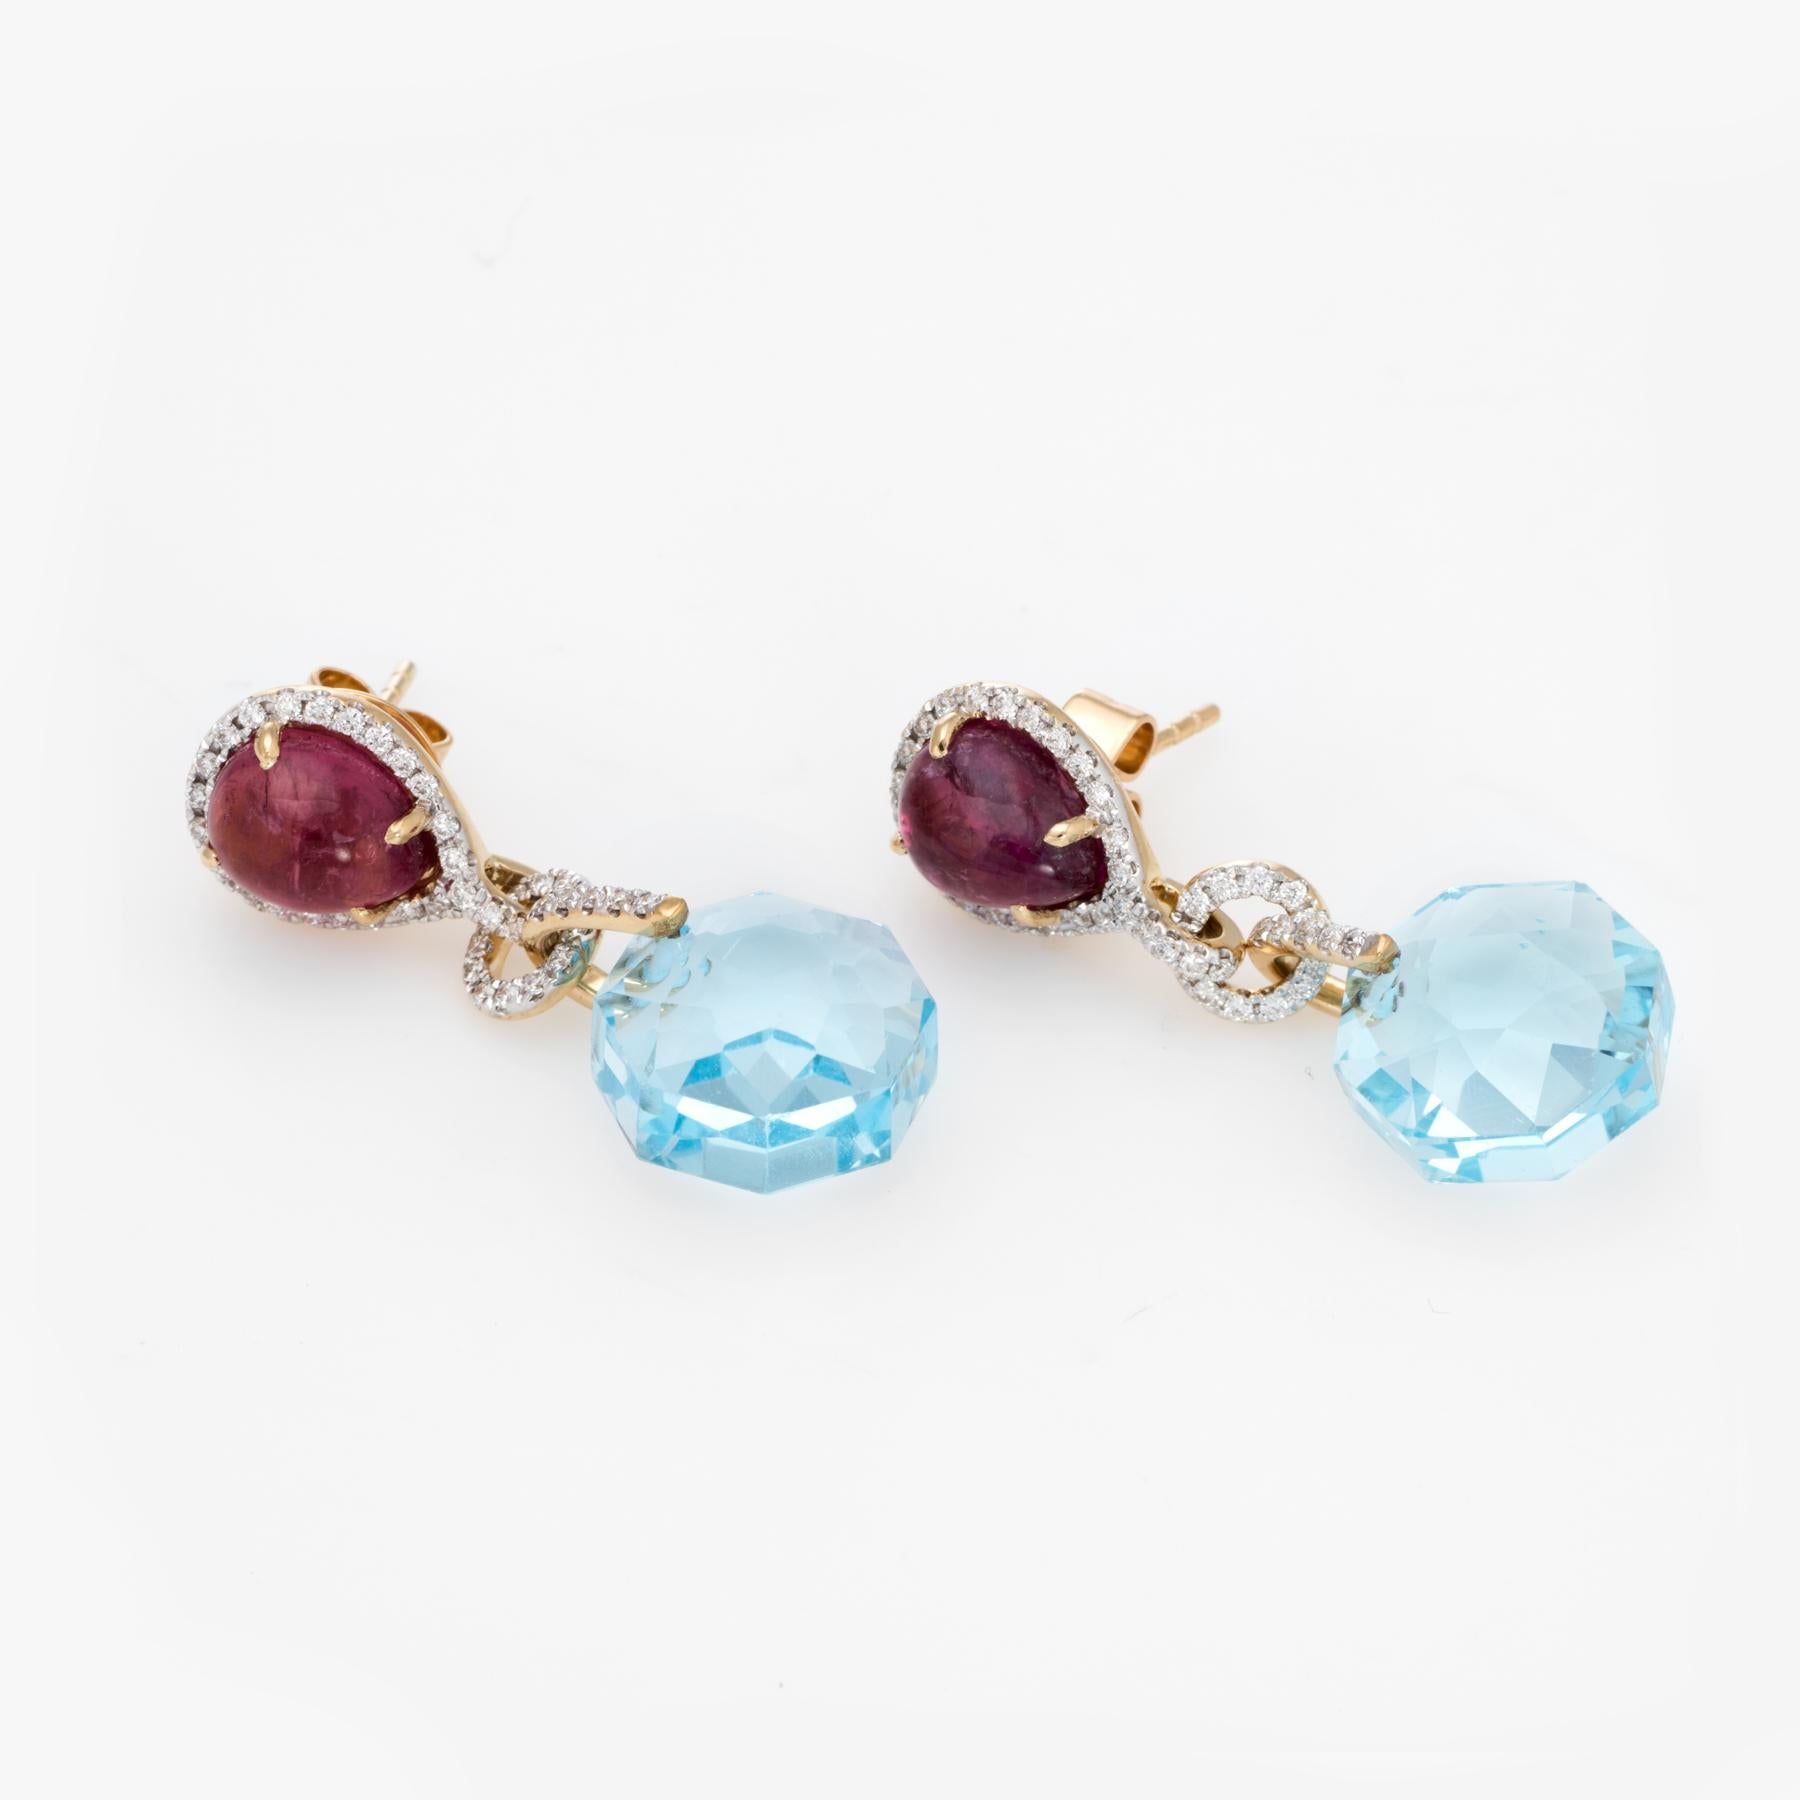 Modern Estate Diamond Earrings Pink Tourmaline Blue Topaz 18 Karat Gold Drop Jewelry